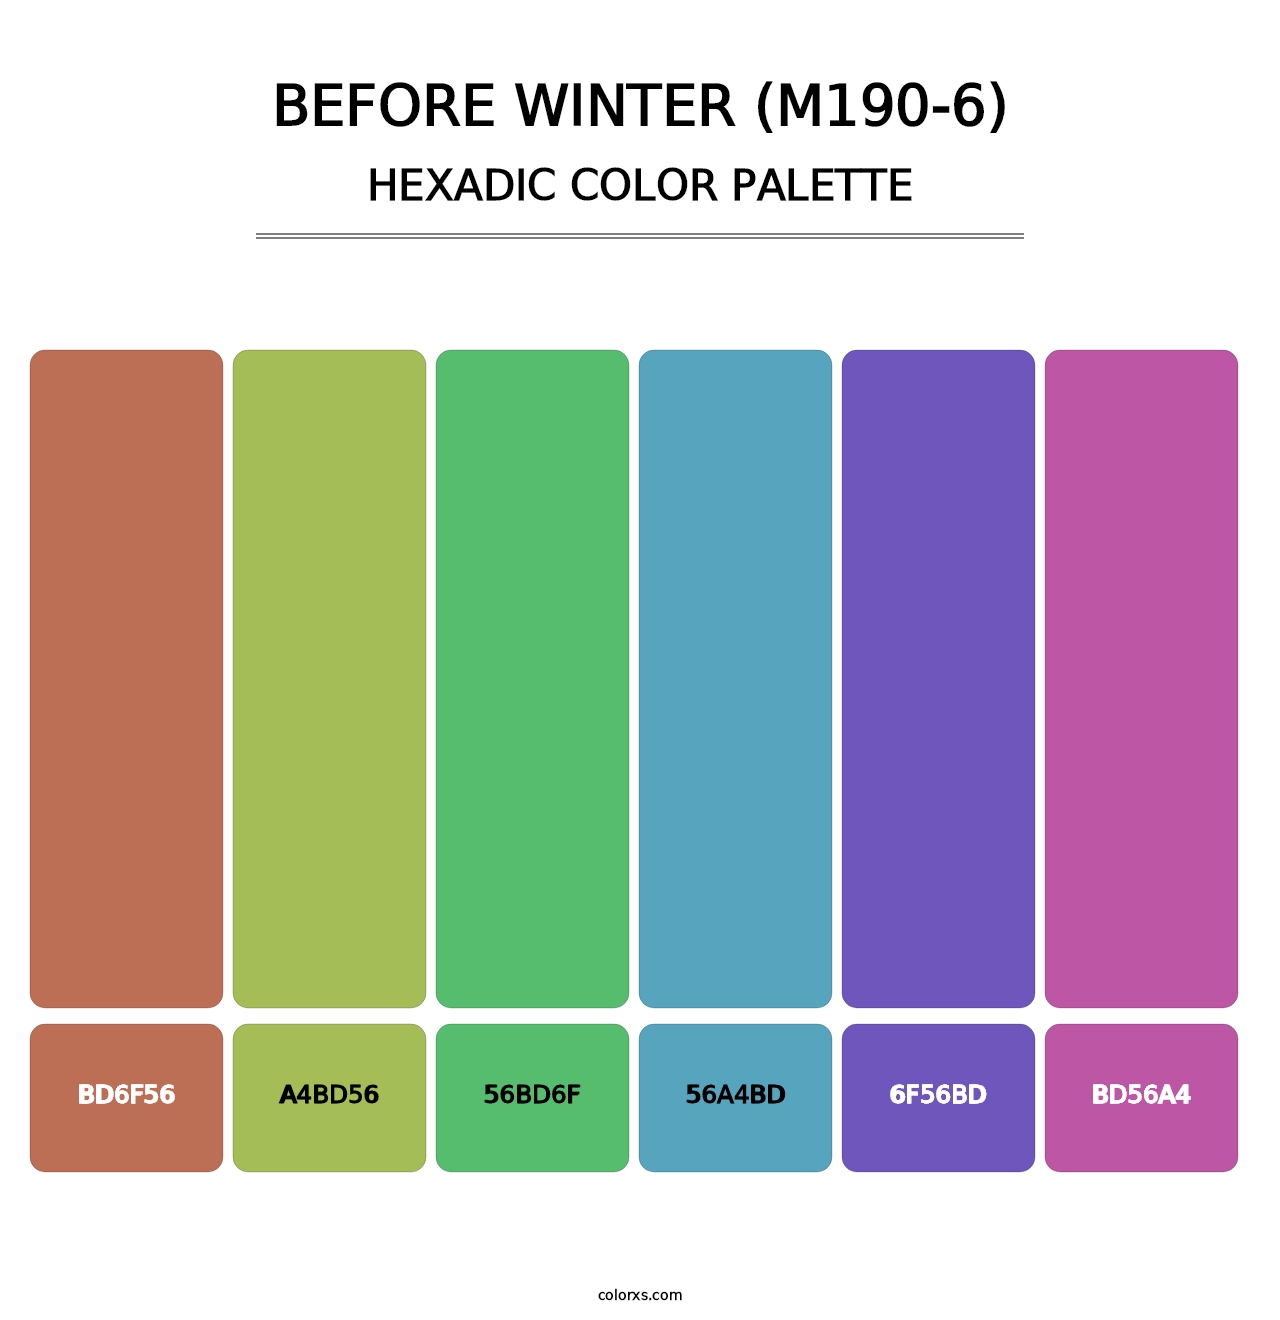 Before Winter (M190-6) - Hexadic Color Palette